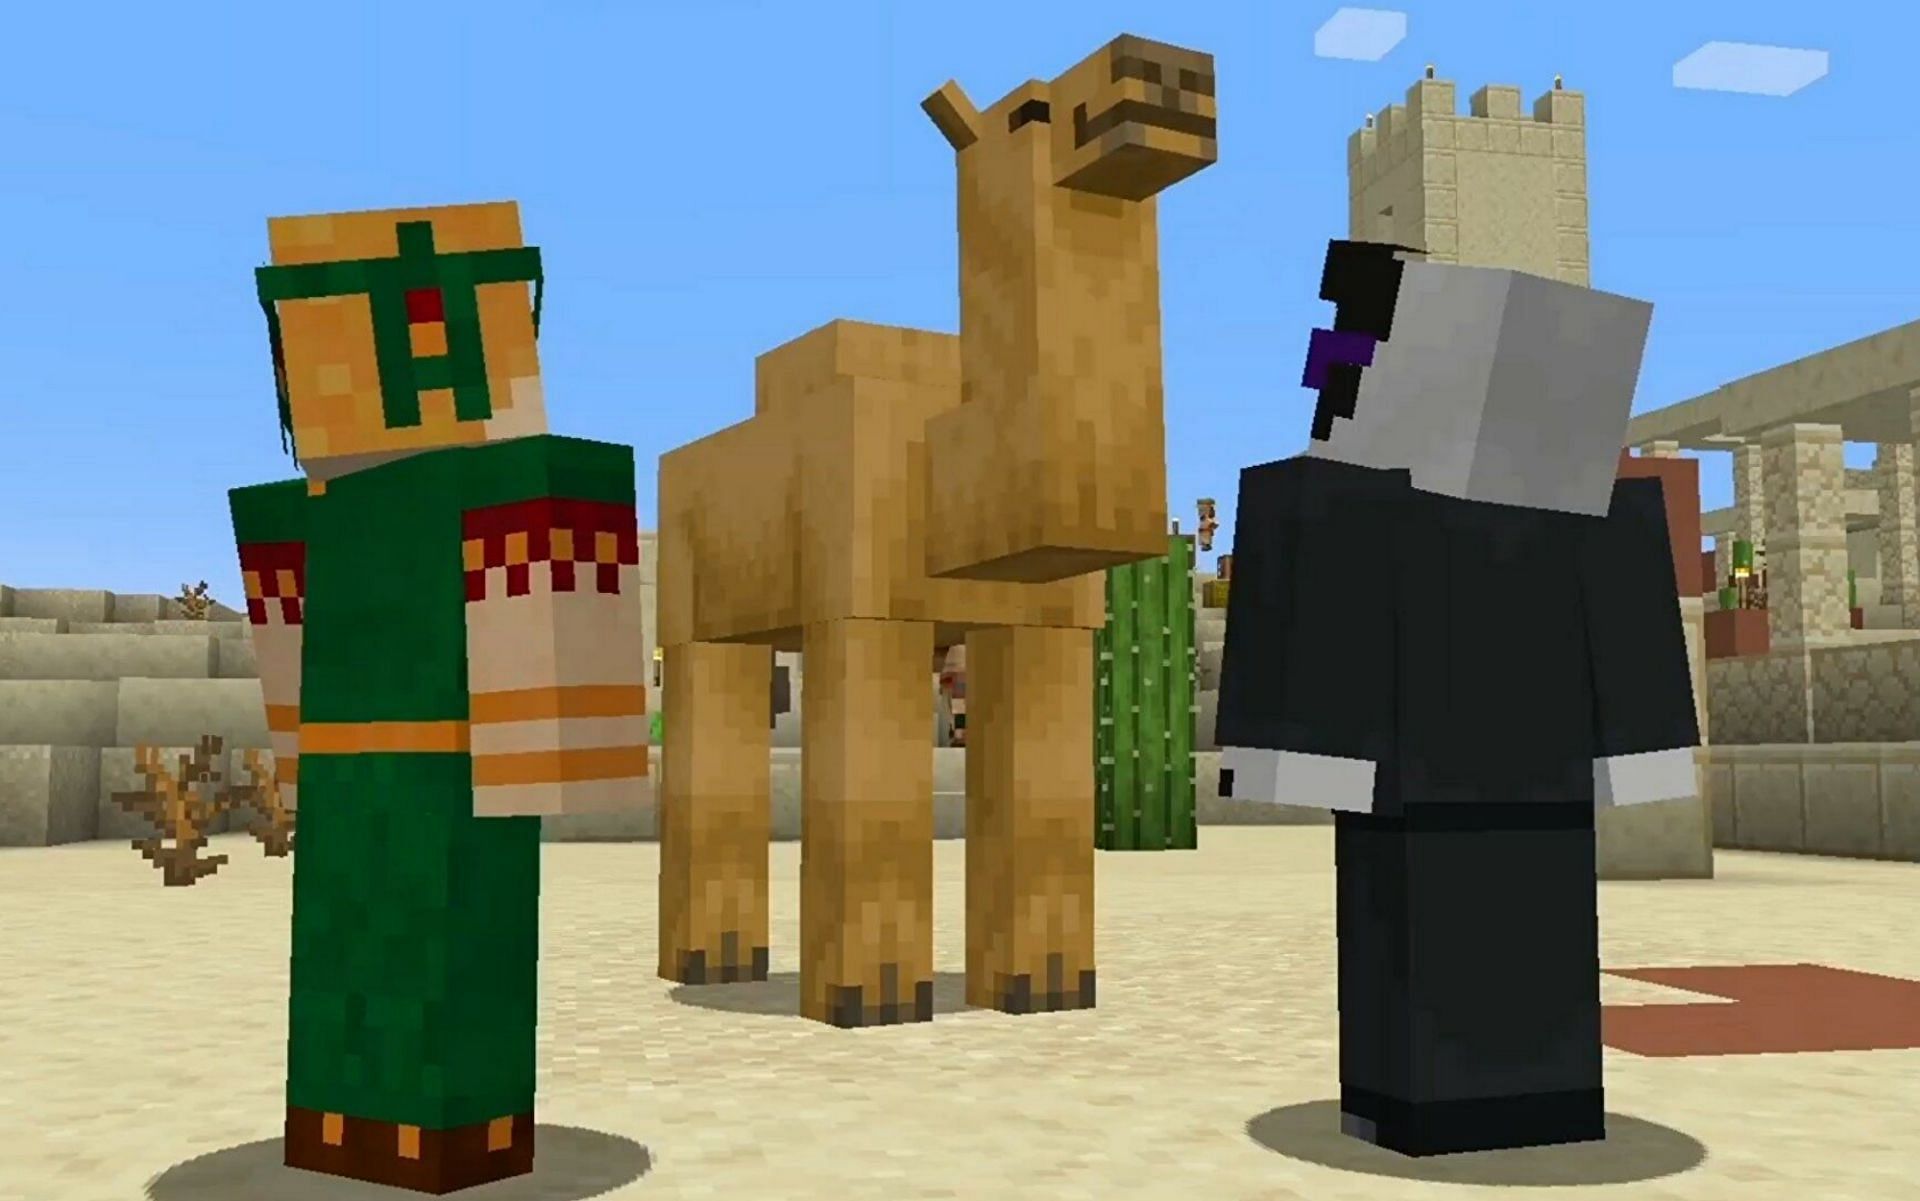 Players observing a camel (Image via Mojang)